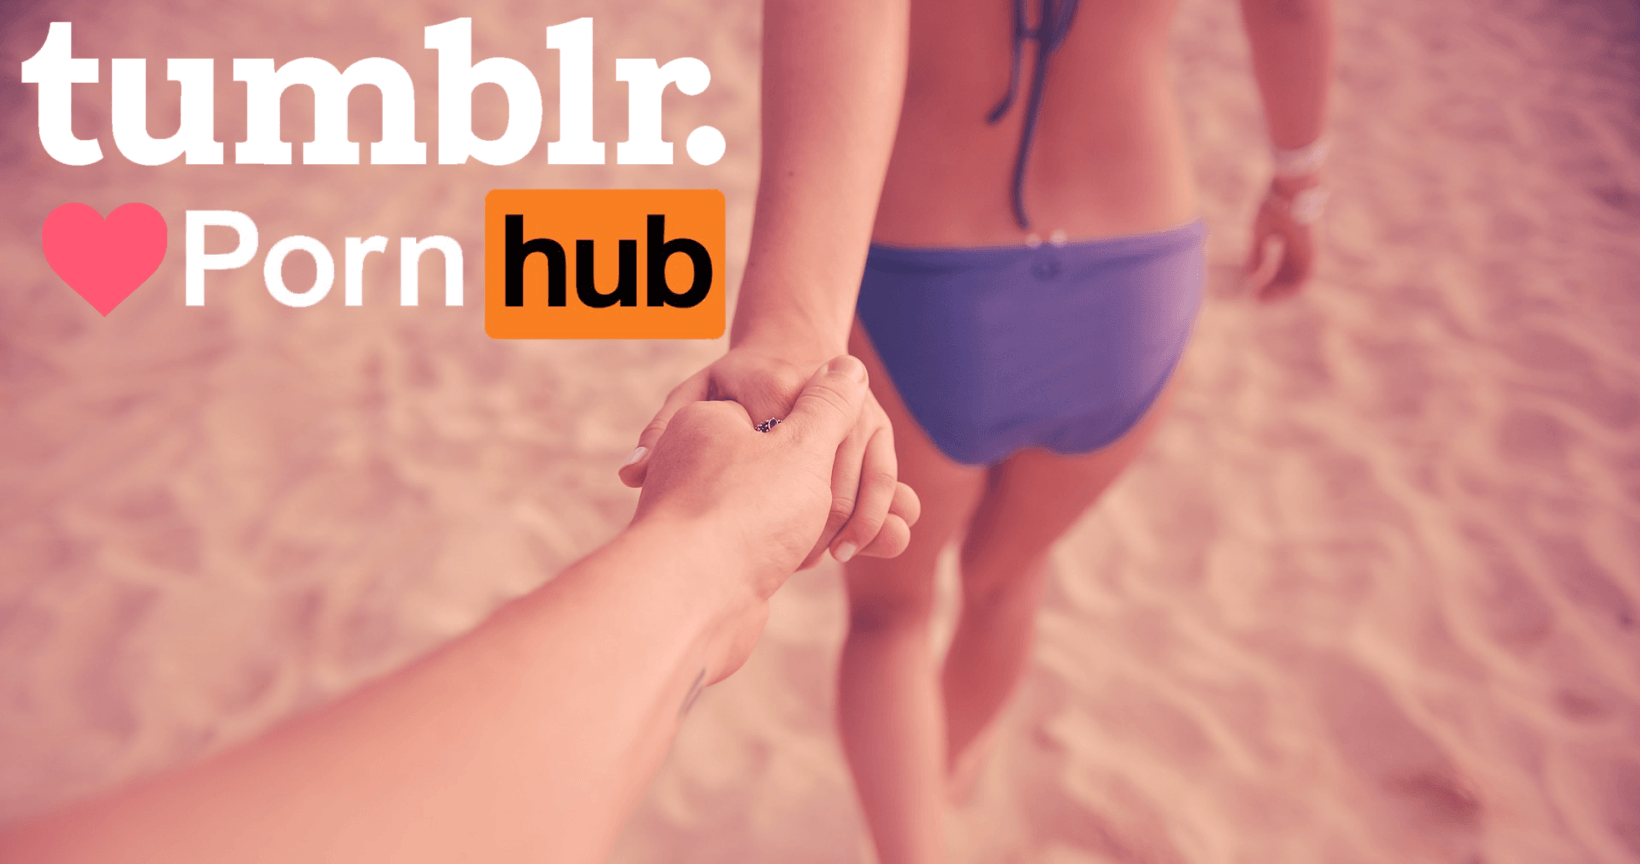 Beach Sex Tumblr - Verizon to unload Tumblr: Could Pornhub provide a happy ending?